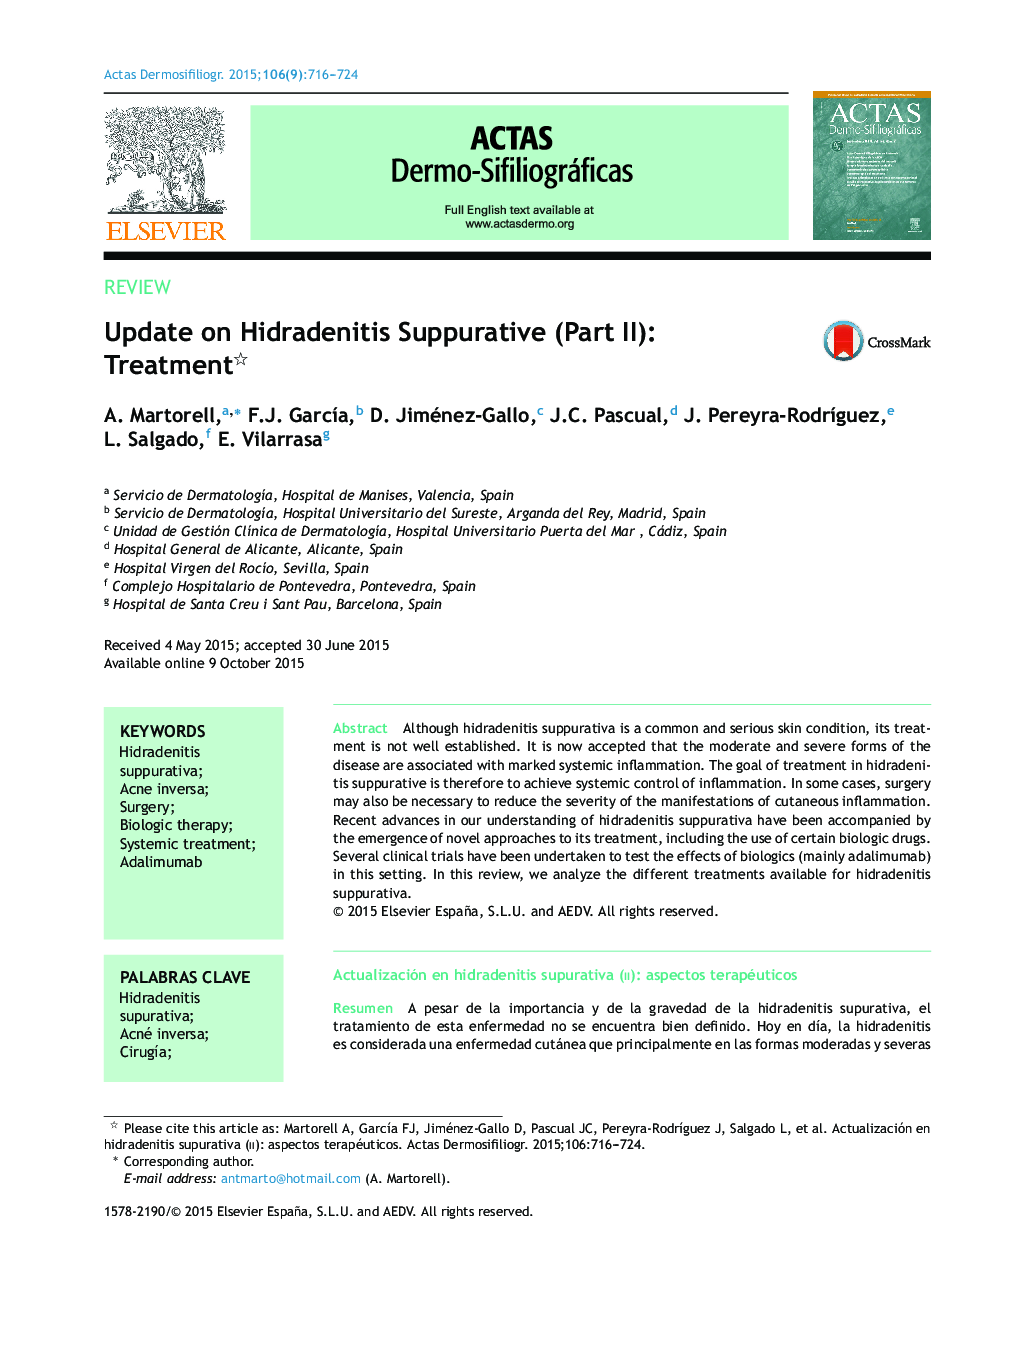 Update on Hidradenitis Suppurative (Part II): Treatment 